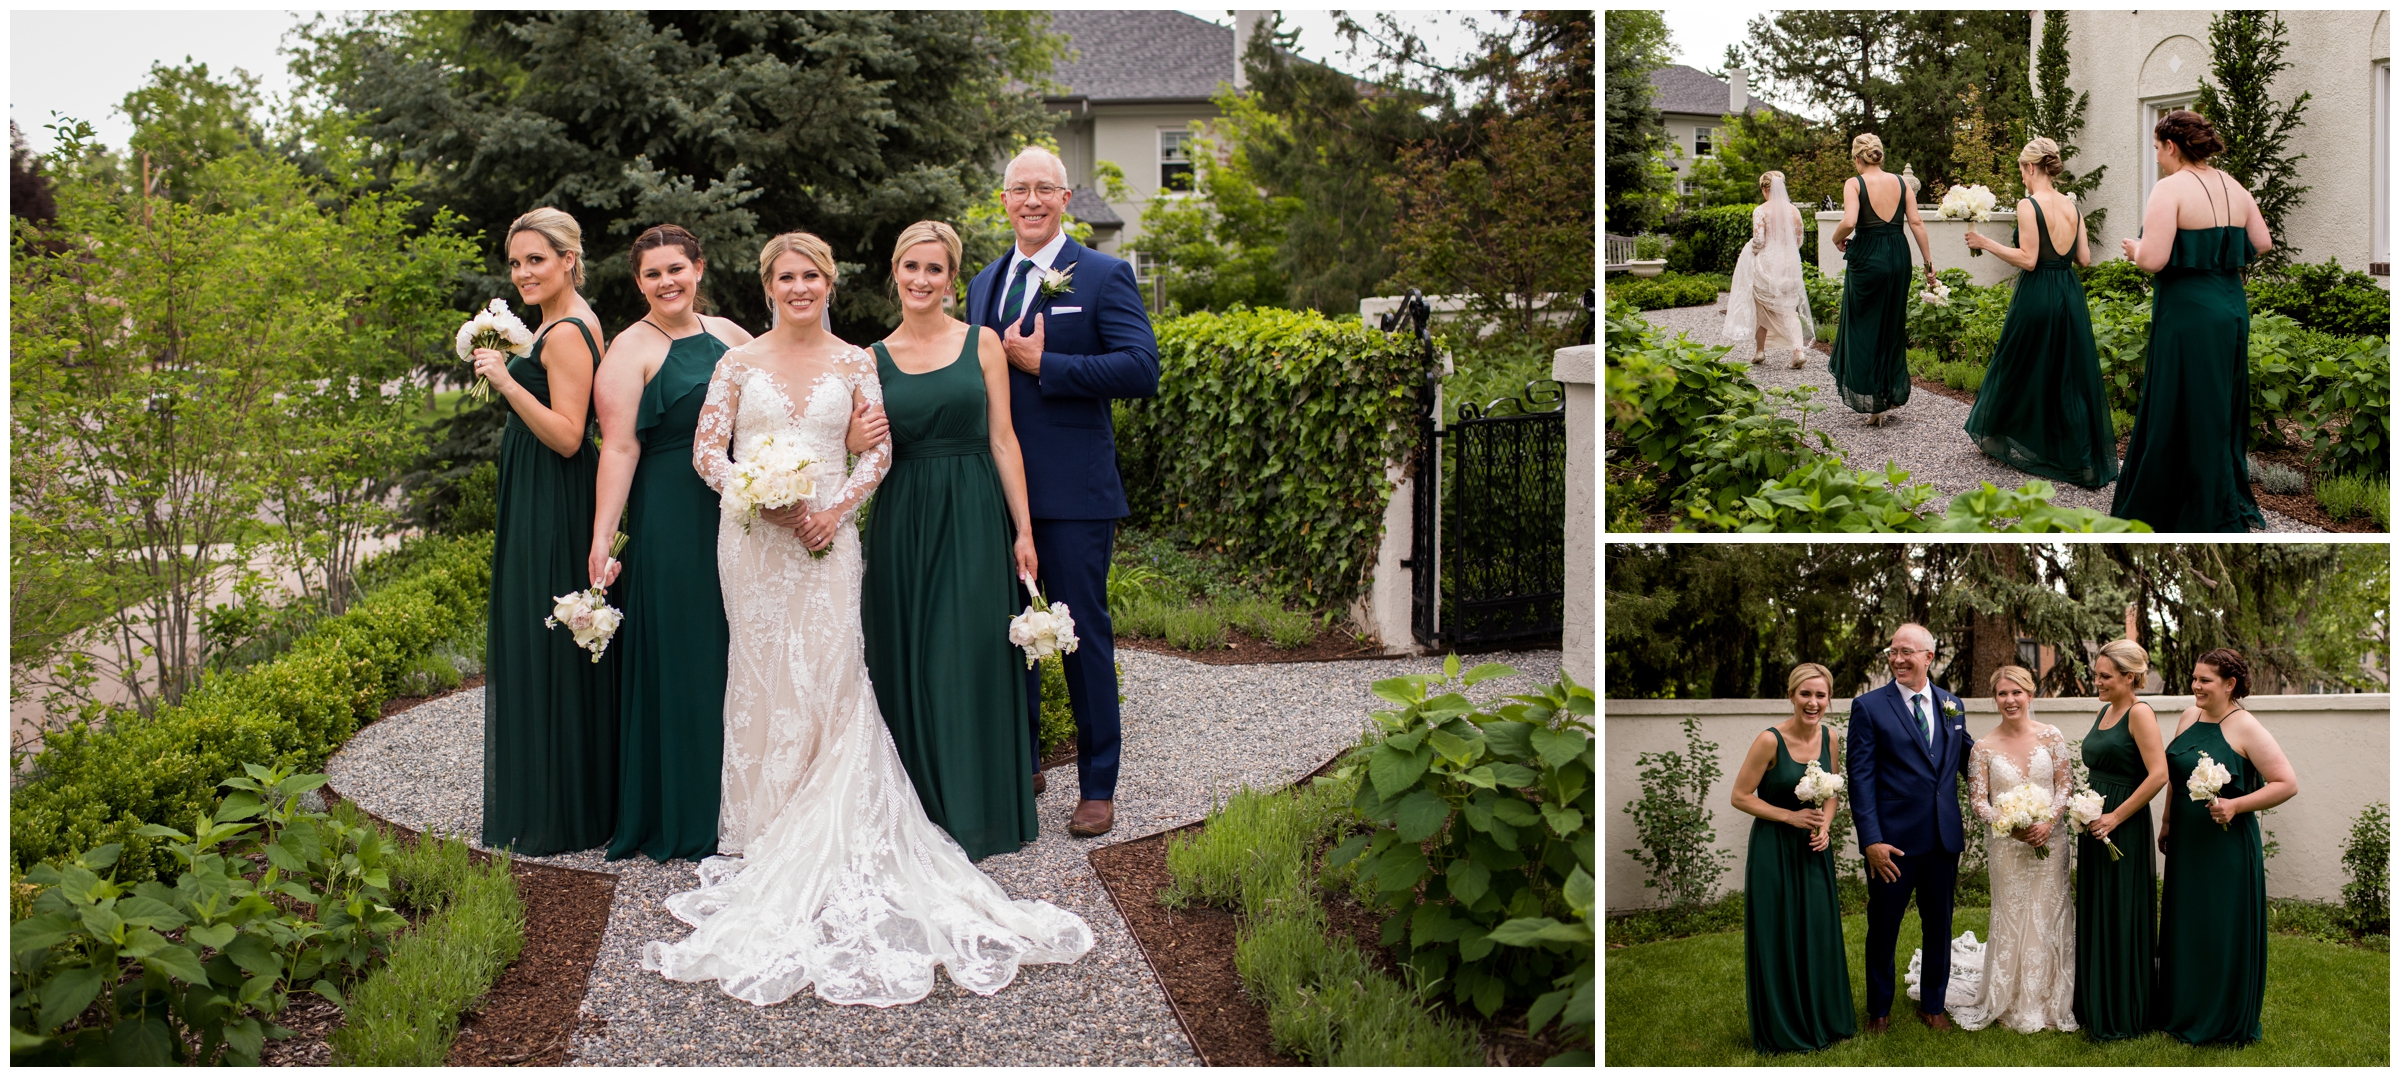 bridal party in dark green and navy blue at intimate Colorado backyard wedding 